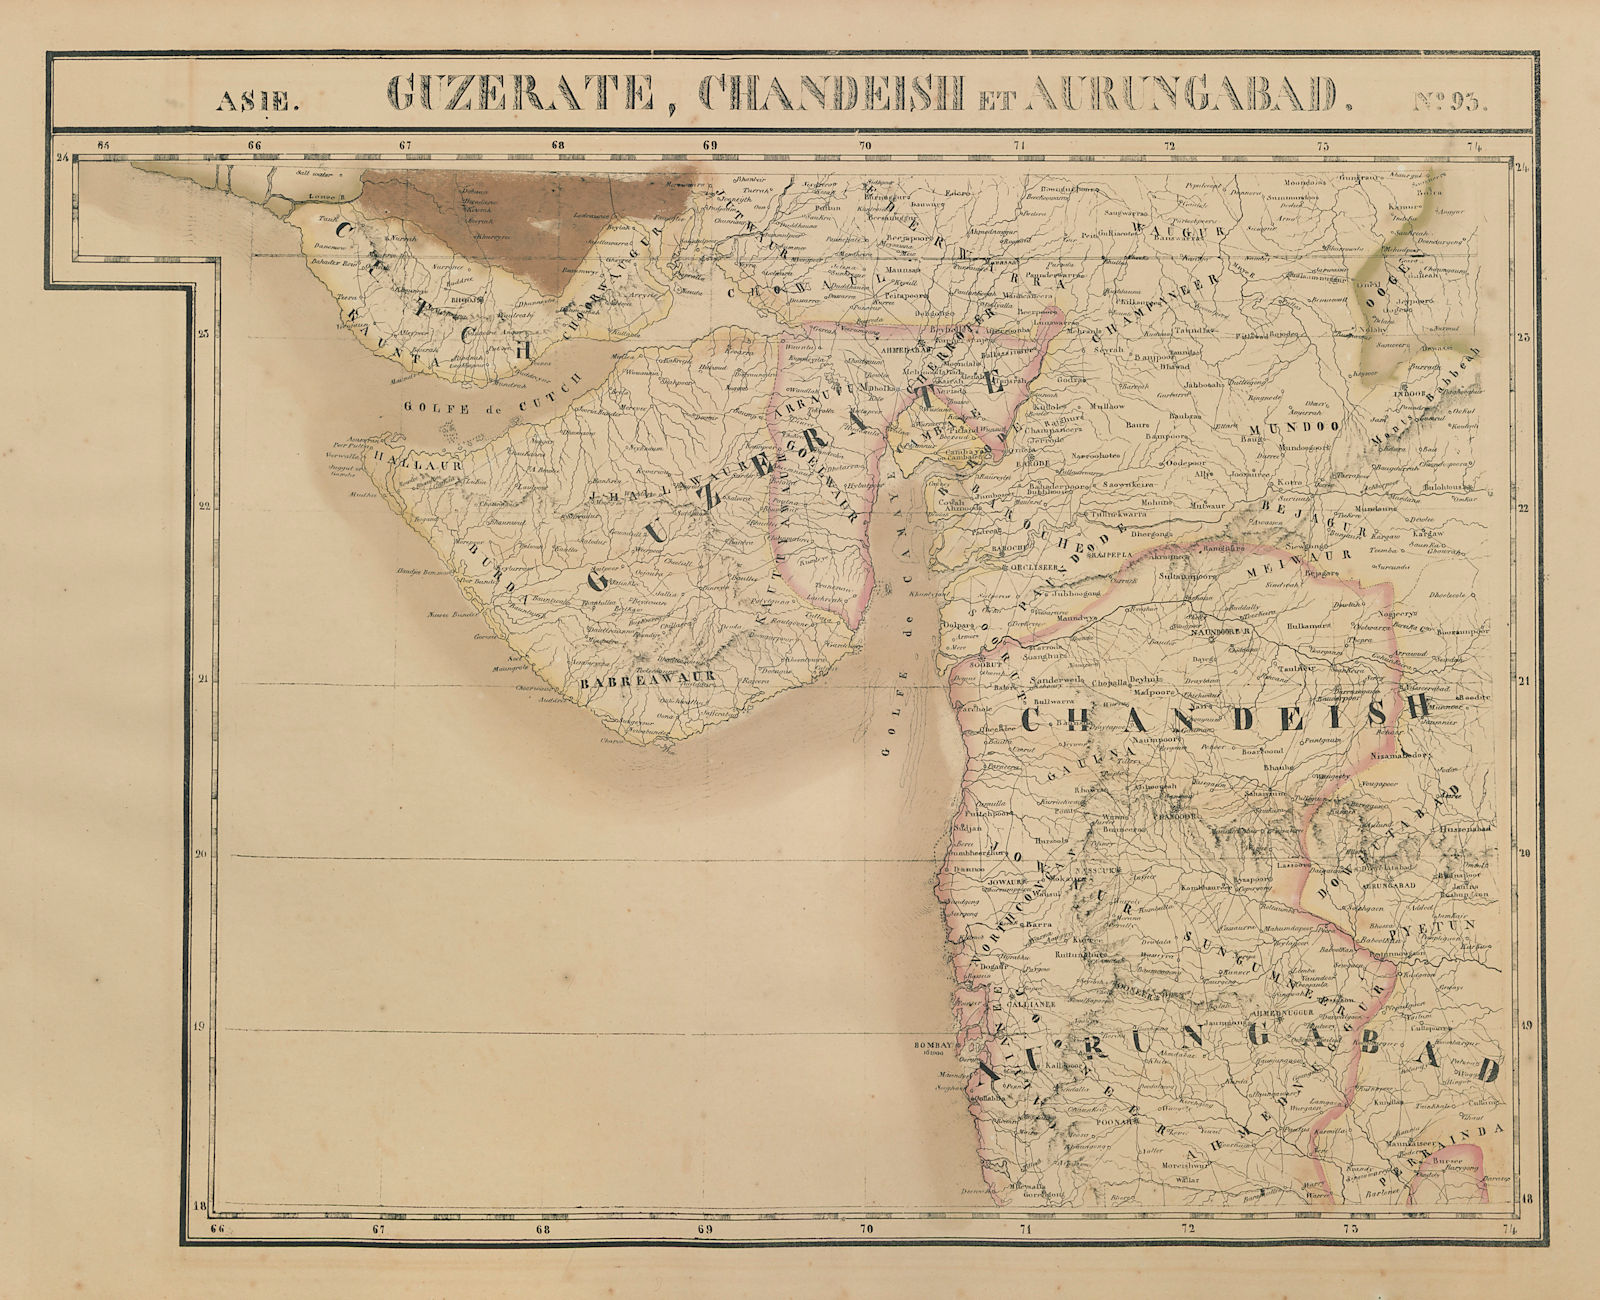 Associate Product Asie Guzerate Chandeish Aurungabad 93 India Gujarat Mumbai VANDERMAELEN 1827 map